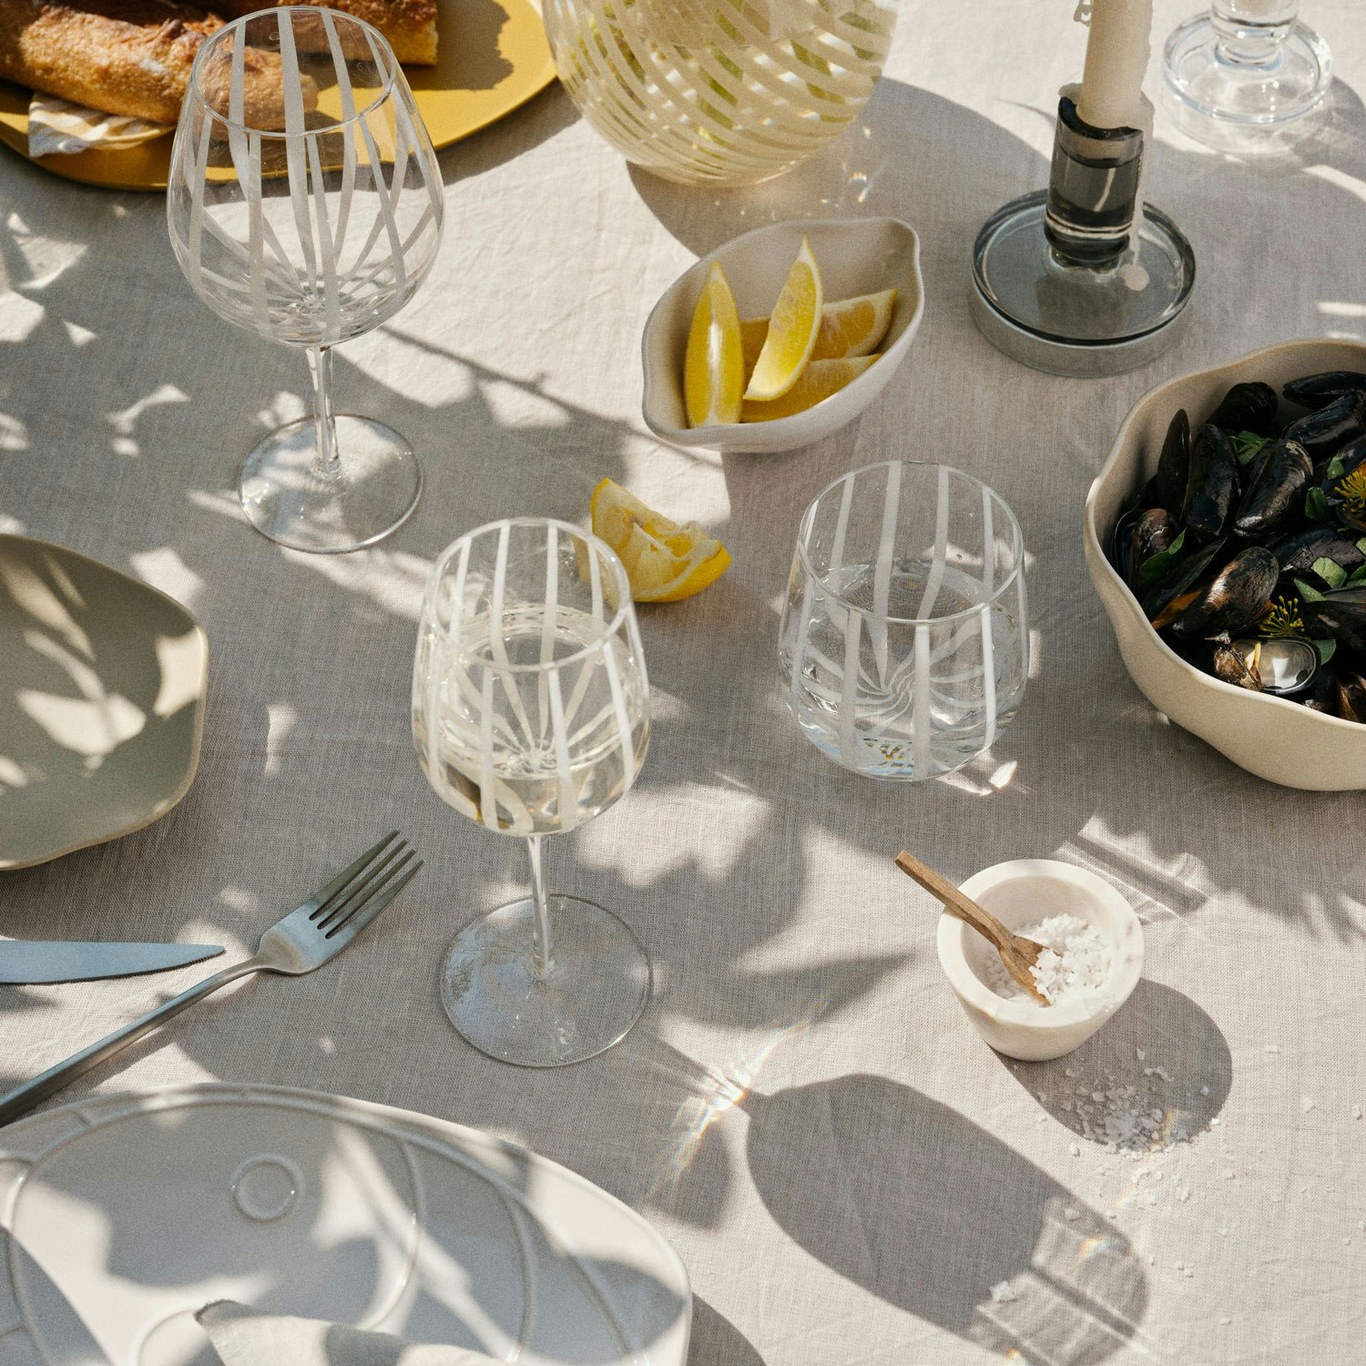 https://royaldesign.com/image/11/broste-copenhagen-striped-white-wine-glass-35-cl-4?w=800&quality=80